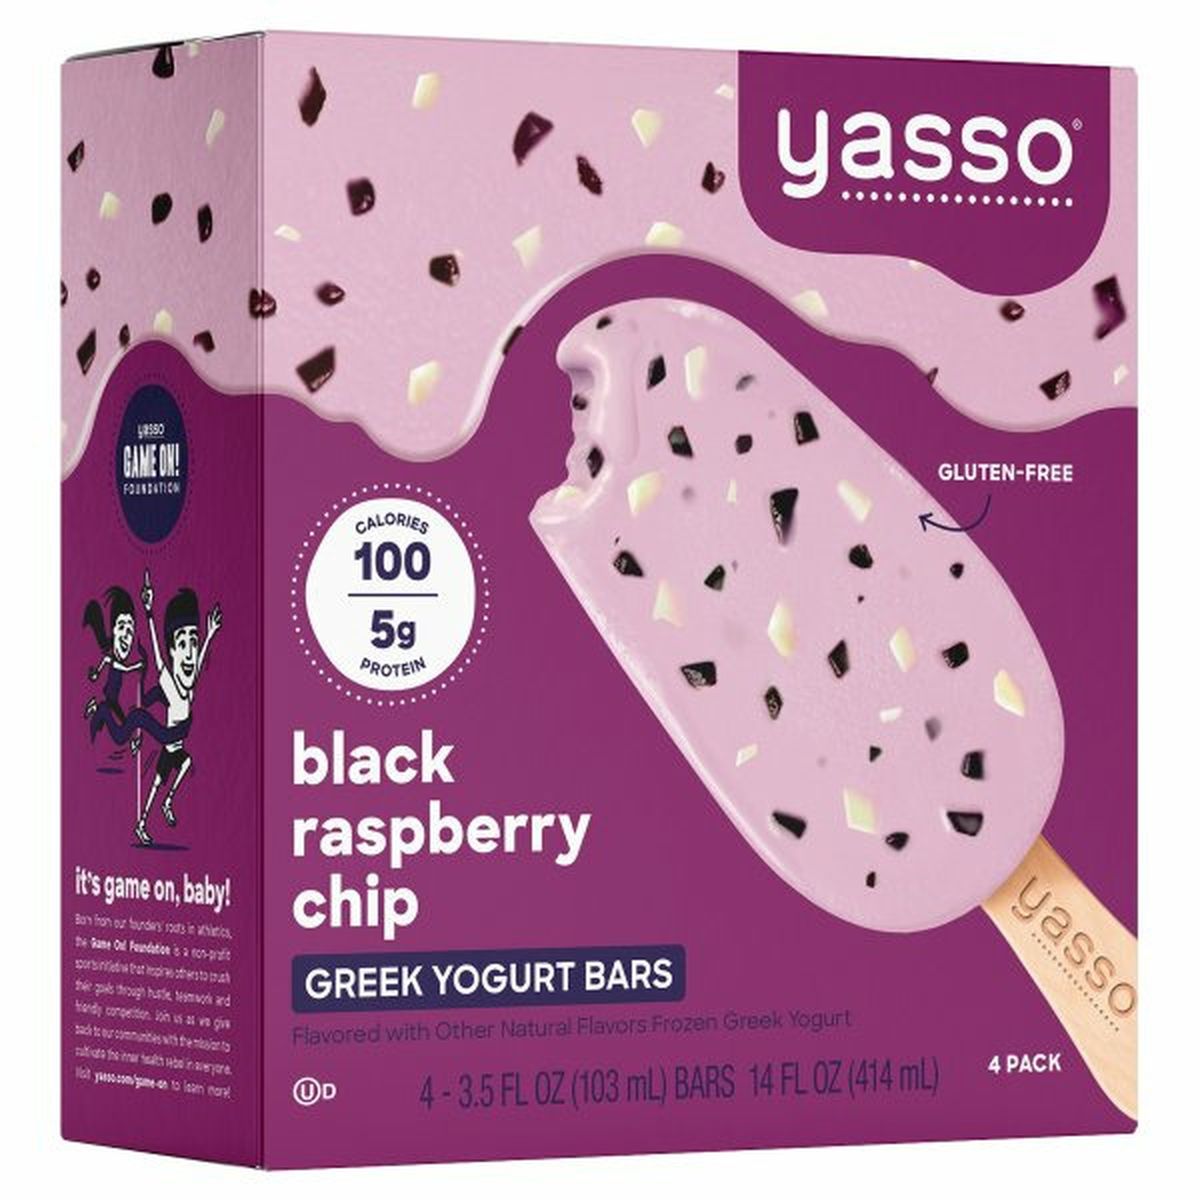 Calories in Yasso Frozen Greek Yogurt, Black Raspberry Chip Bars, 4 pack